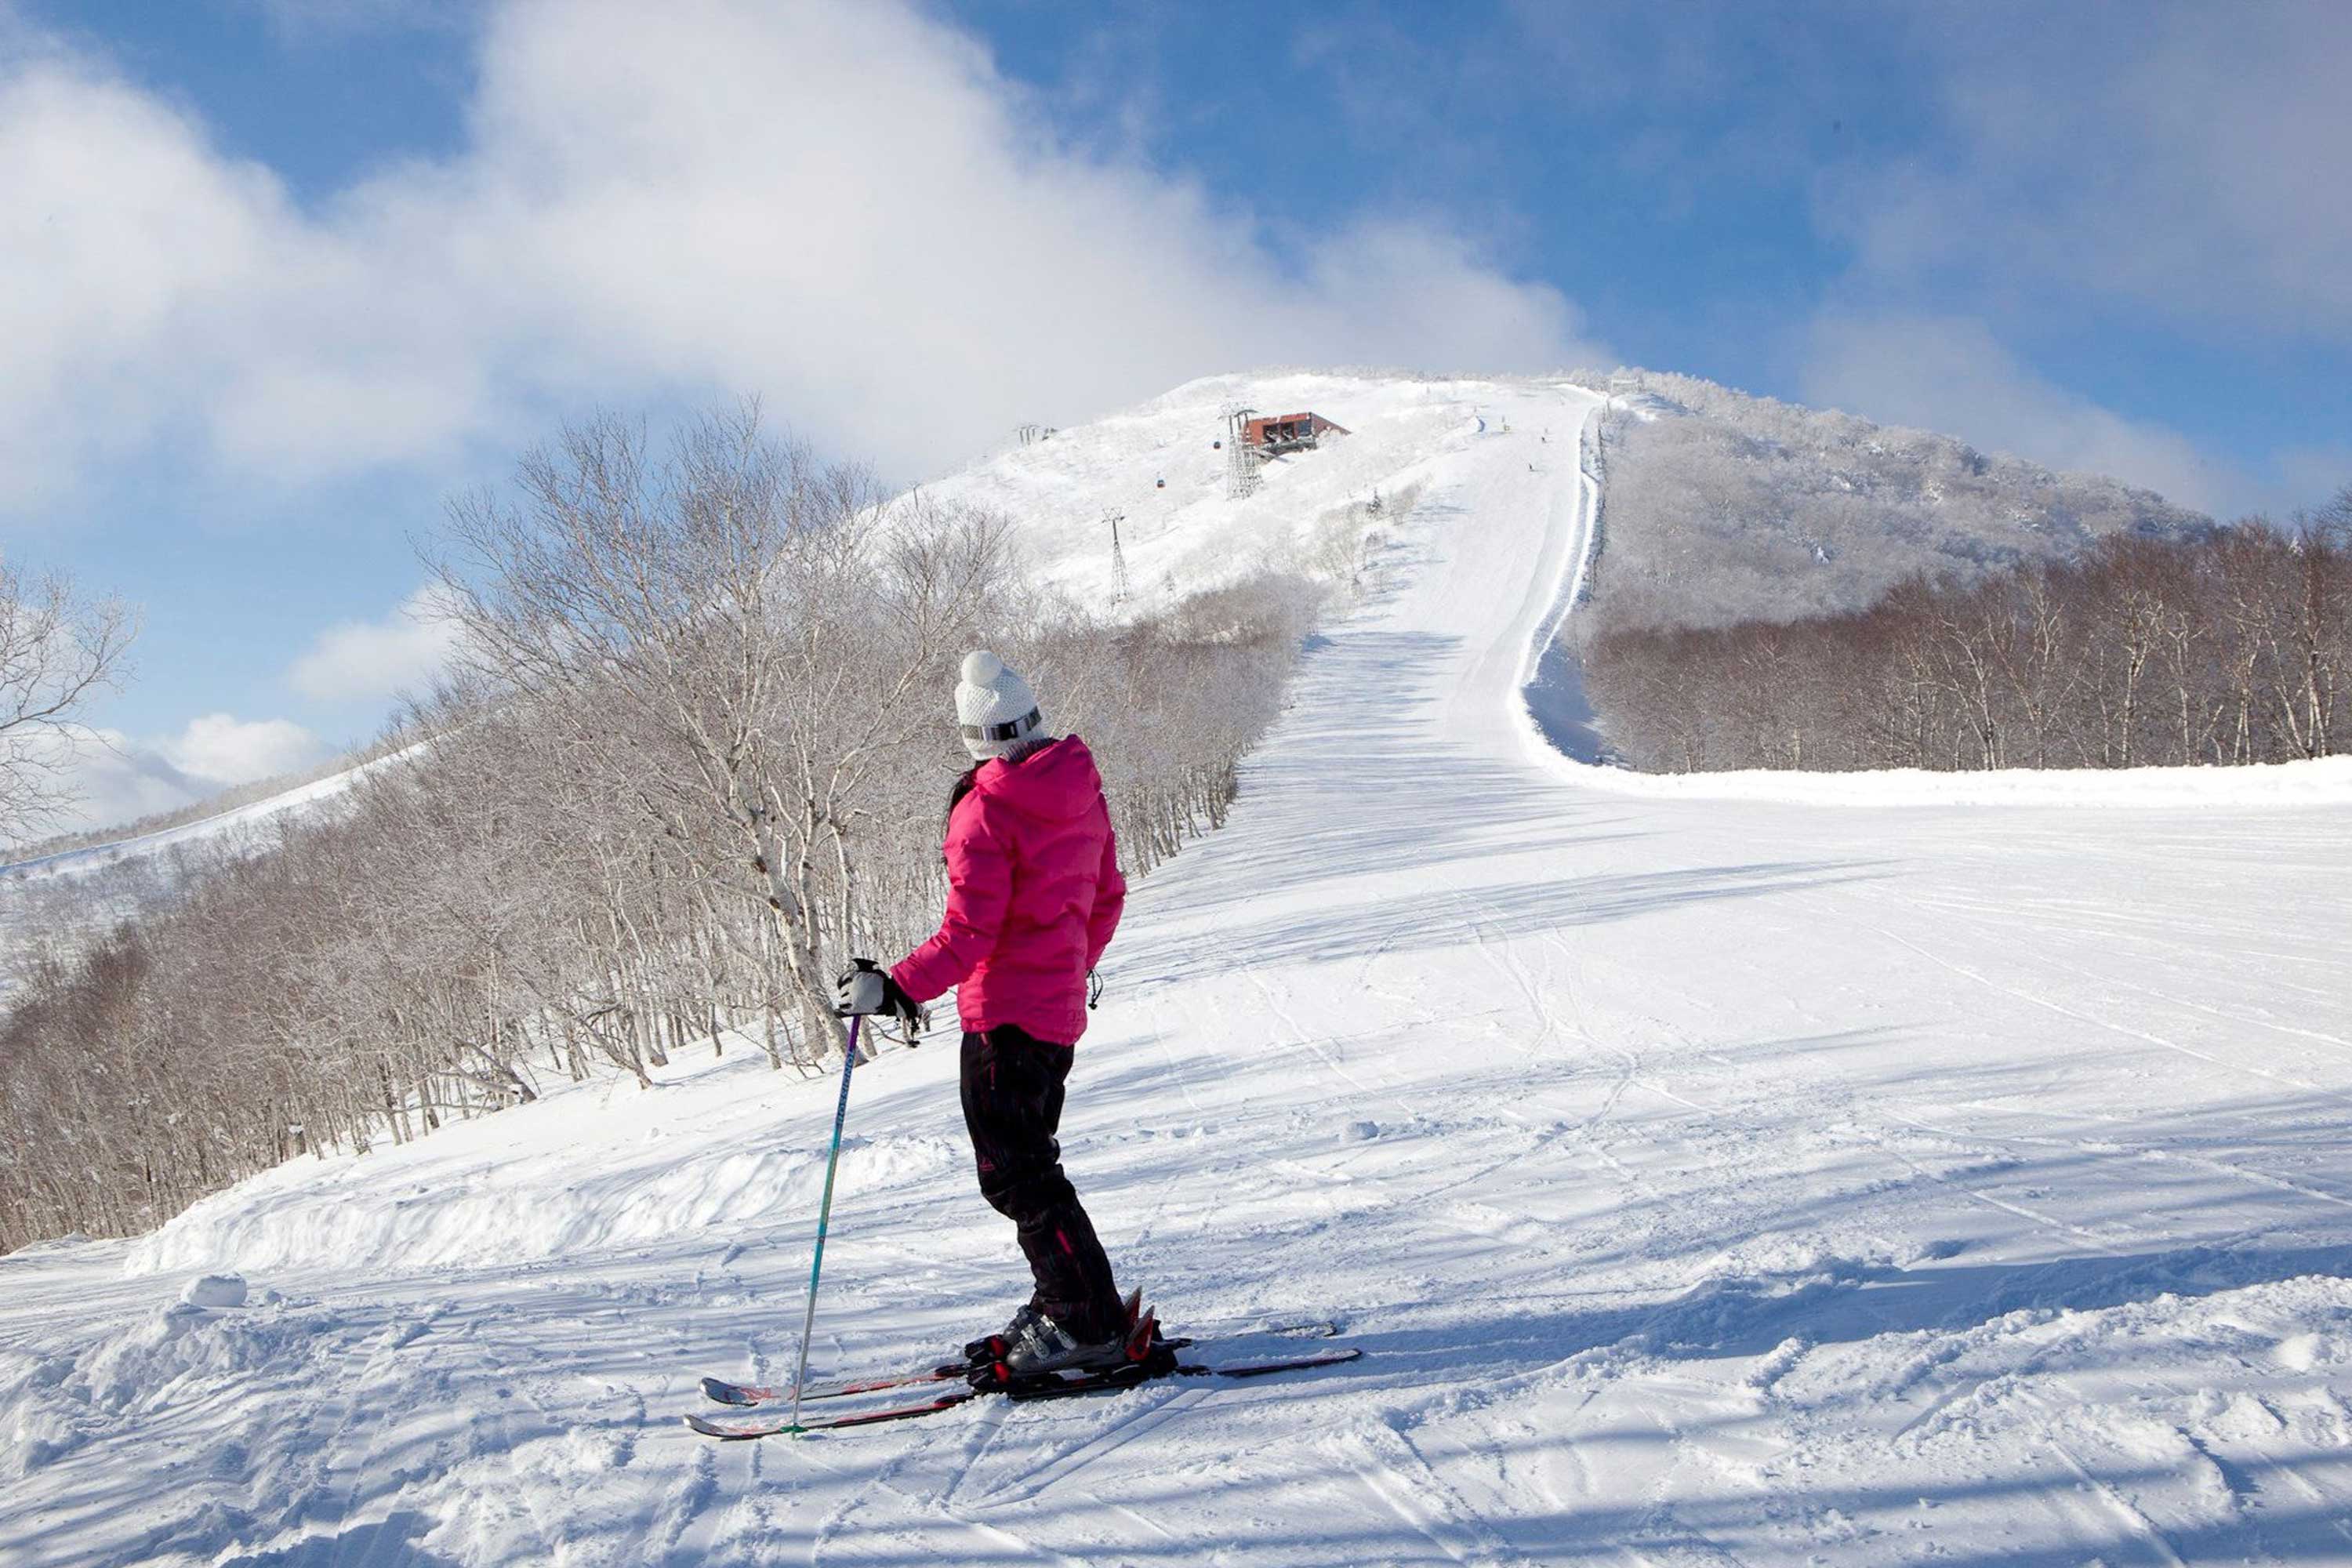 Sohoro Japan Club Med Ski holiday